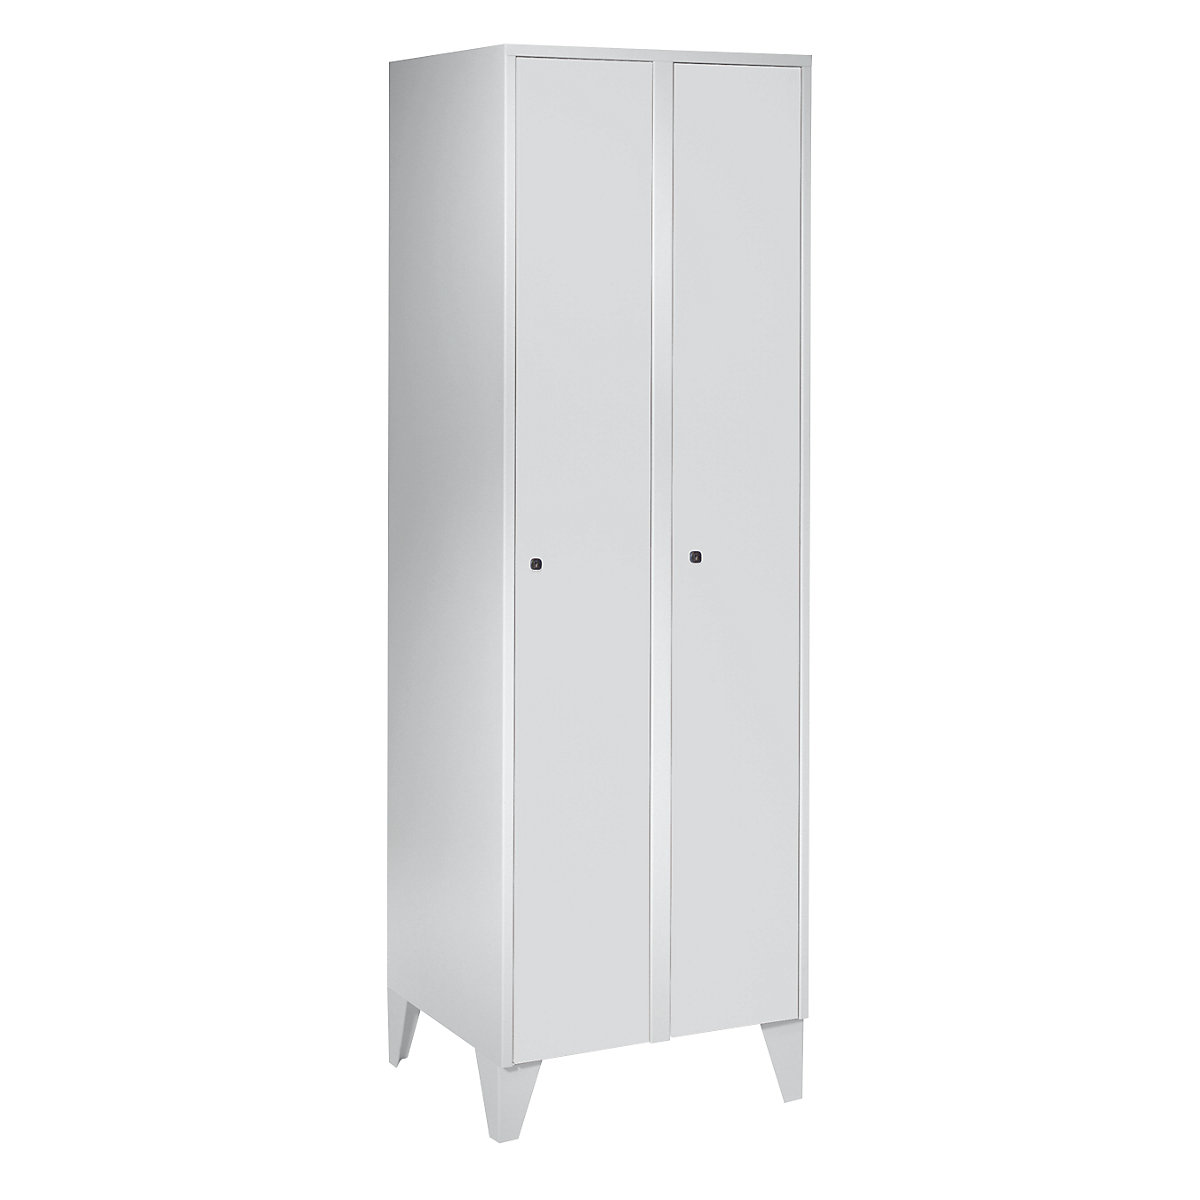 Cloakroom locker with feet – Wolf, HxWxD 1850 x 600 x 500 mm, 2 compartments, light grey-7